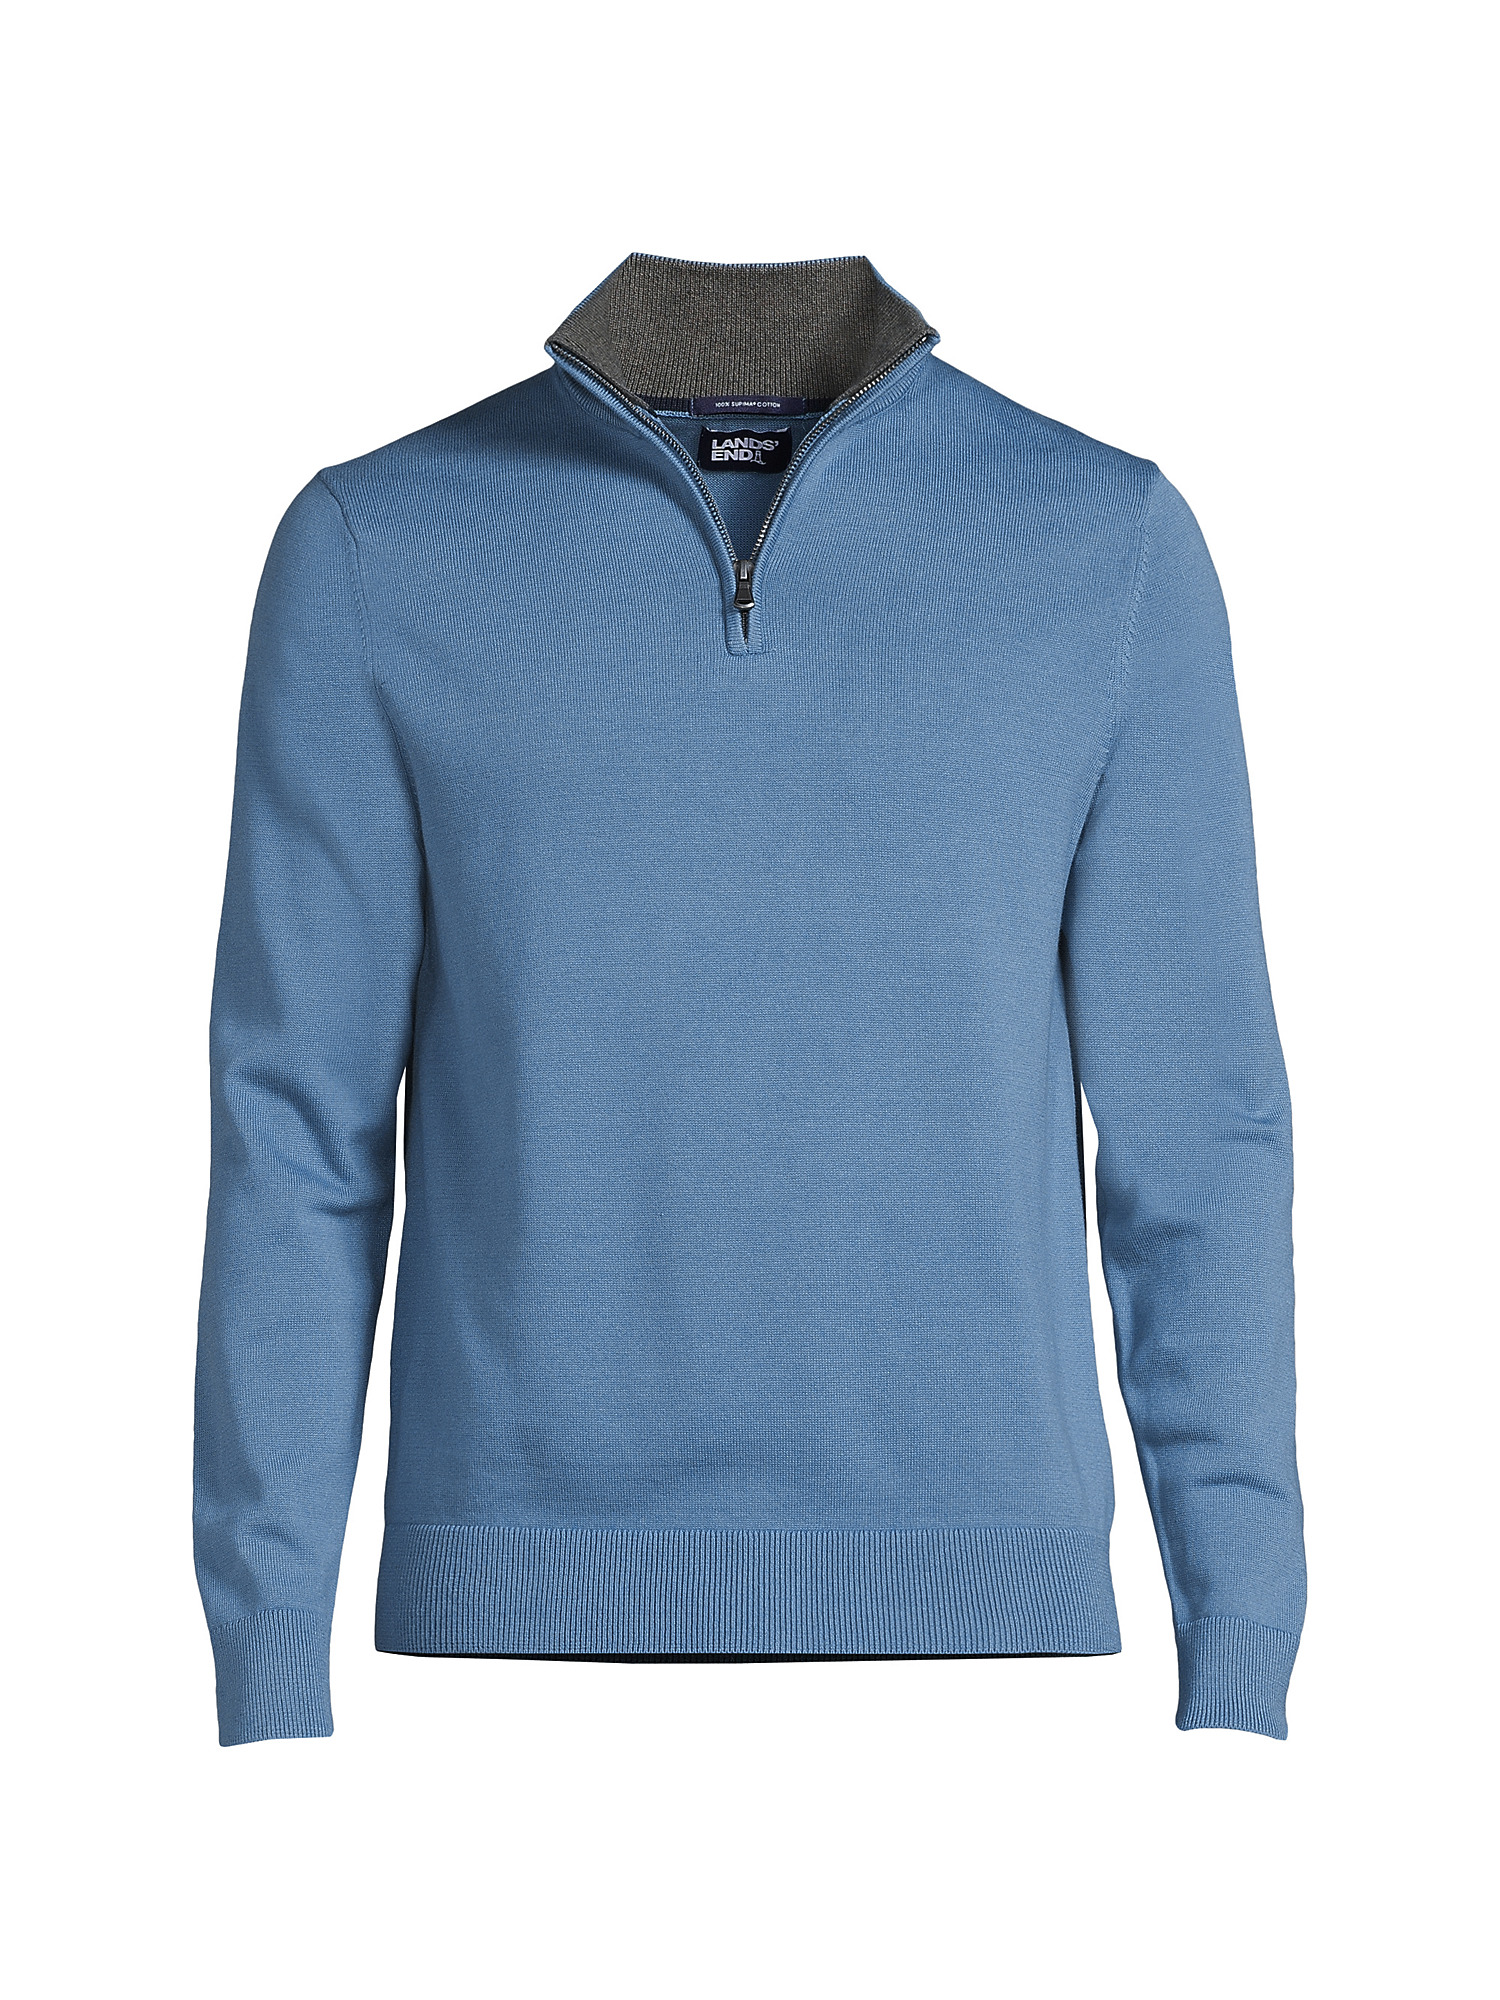 Lands' End Men's Fine Gauge Supima Cotton Quarter Zip Sweater - Walmart.com